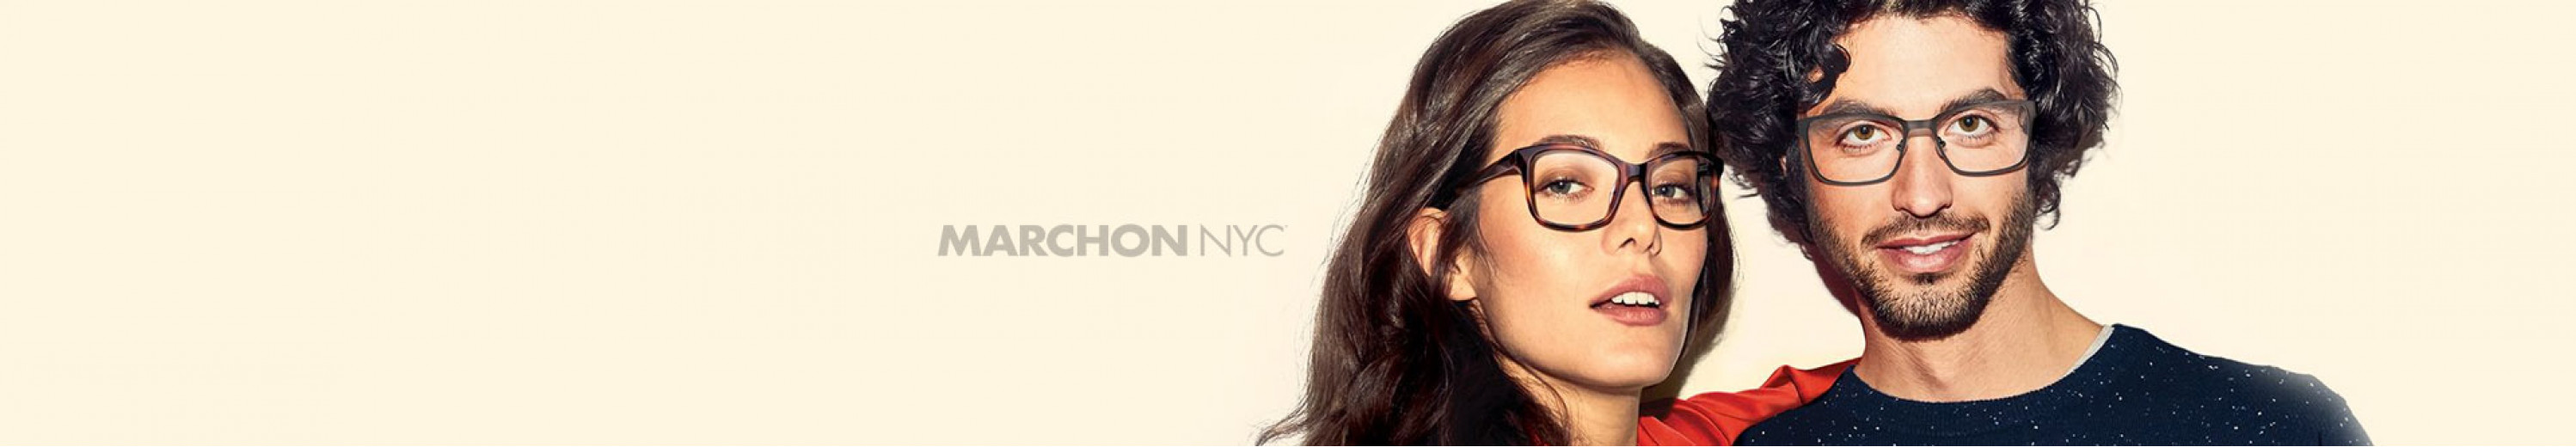 Marchon NYC Eyeglasses